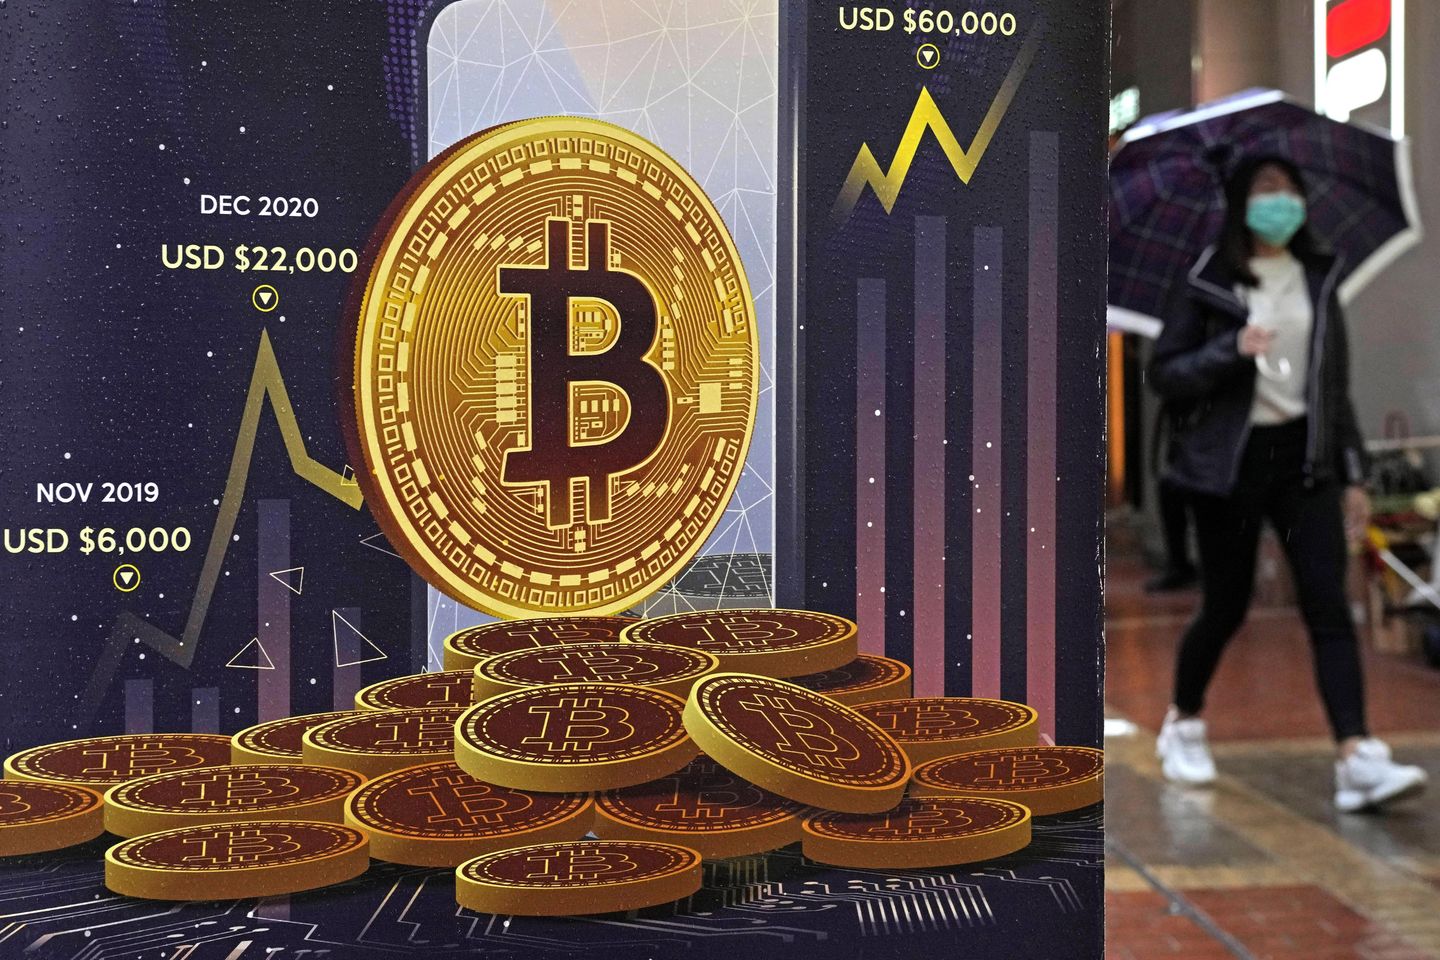 Bitcoin jatuh, stablecoin jatuh dalam minggu liar di crypto